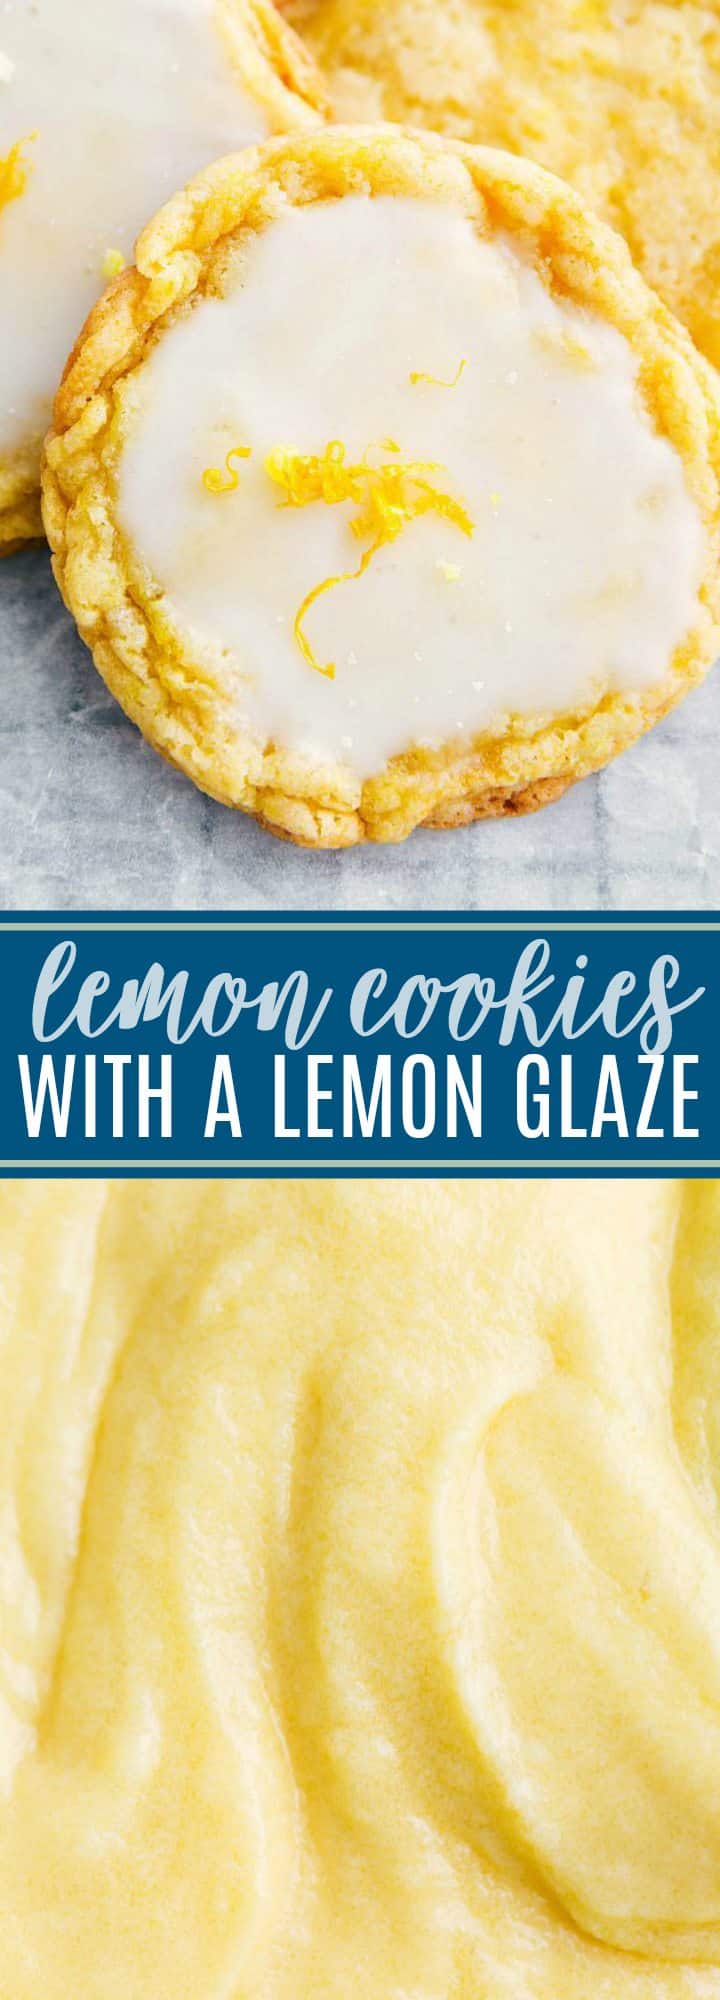 The ultimate BEST EVER lemon cookies with a lemon glaze. via chelseasmessyapron.com #lemon #cookie #glaze #best #easy #crinkle #dessert #zest #lemonhead #easy